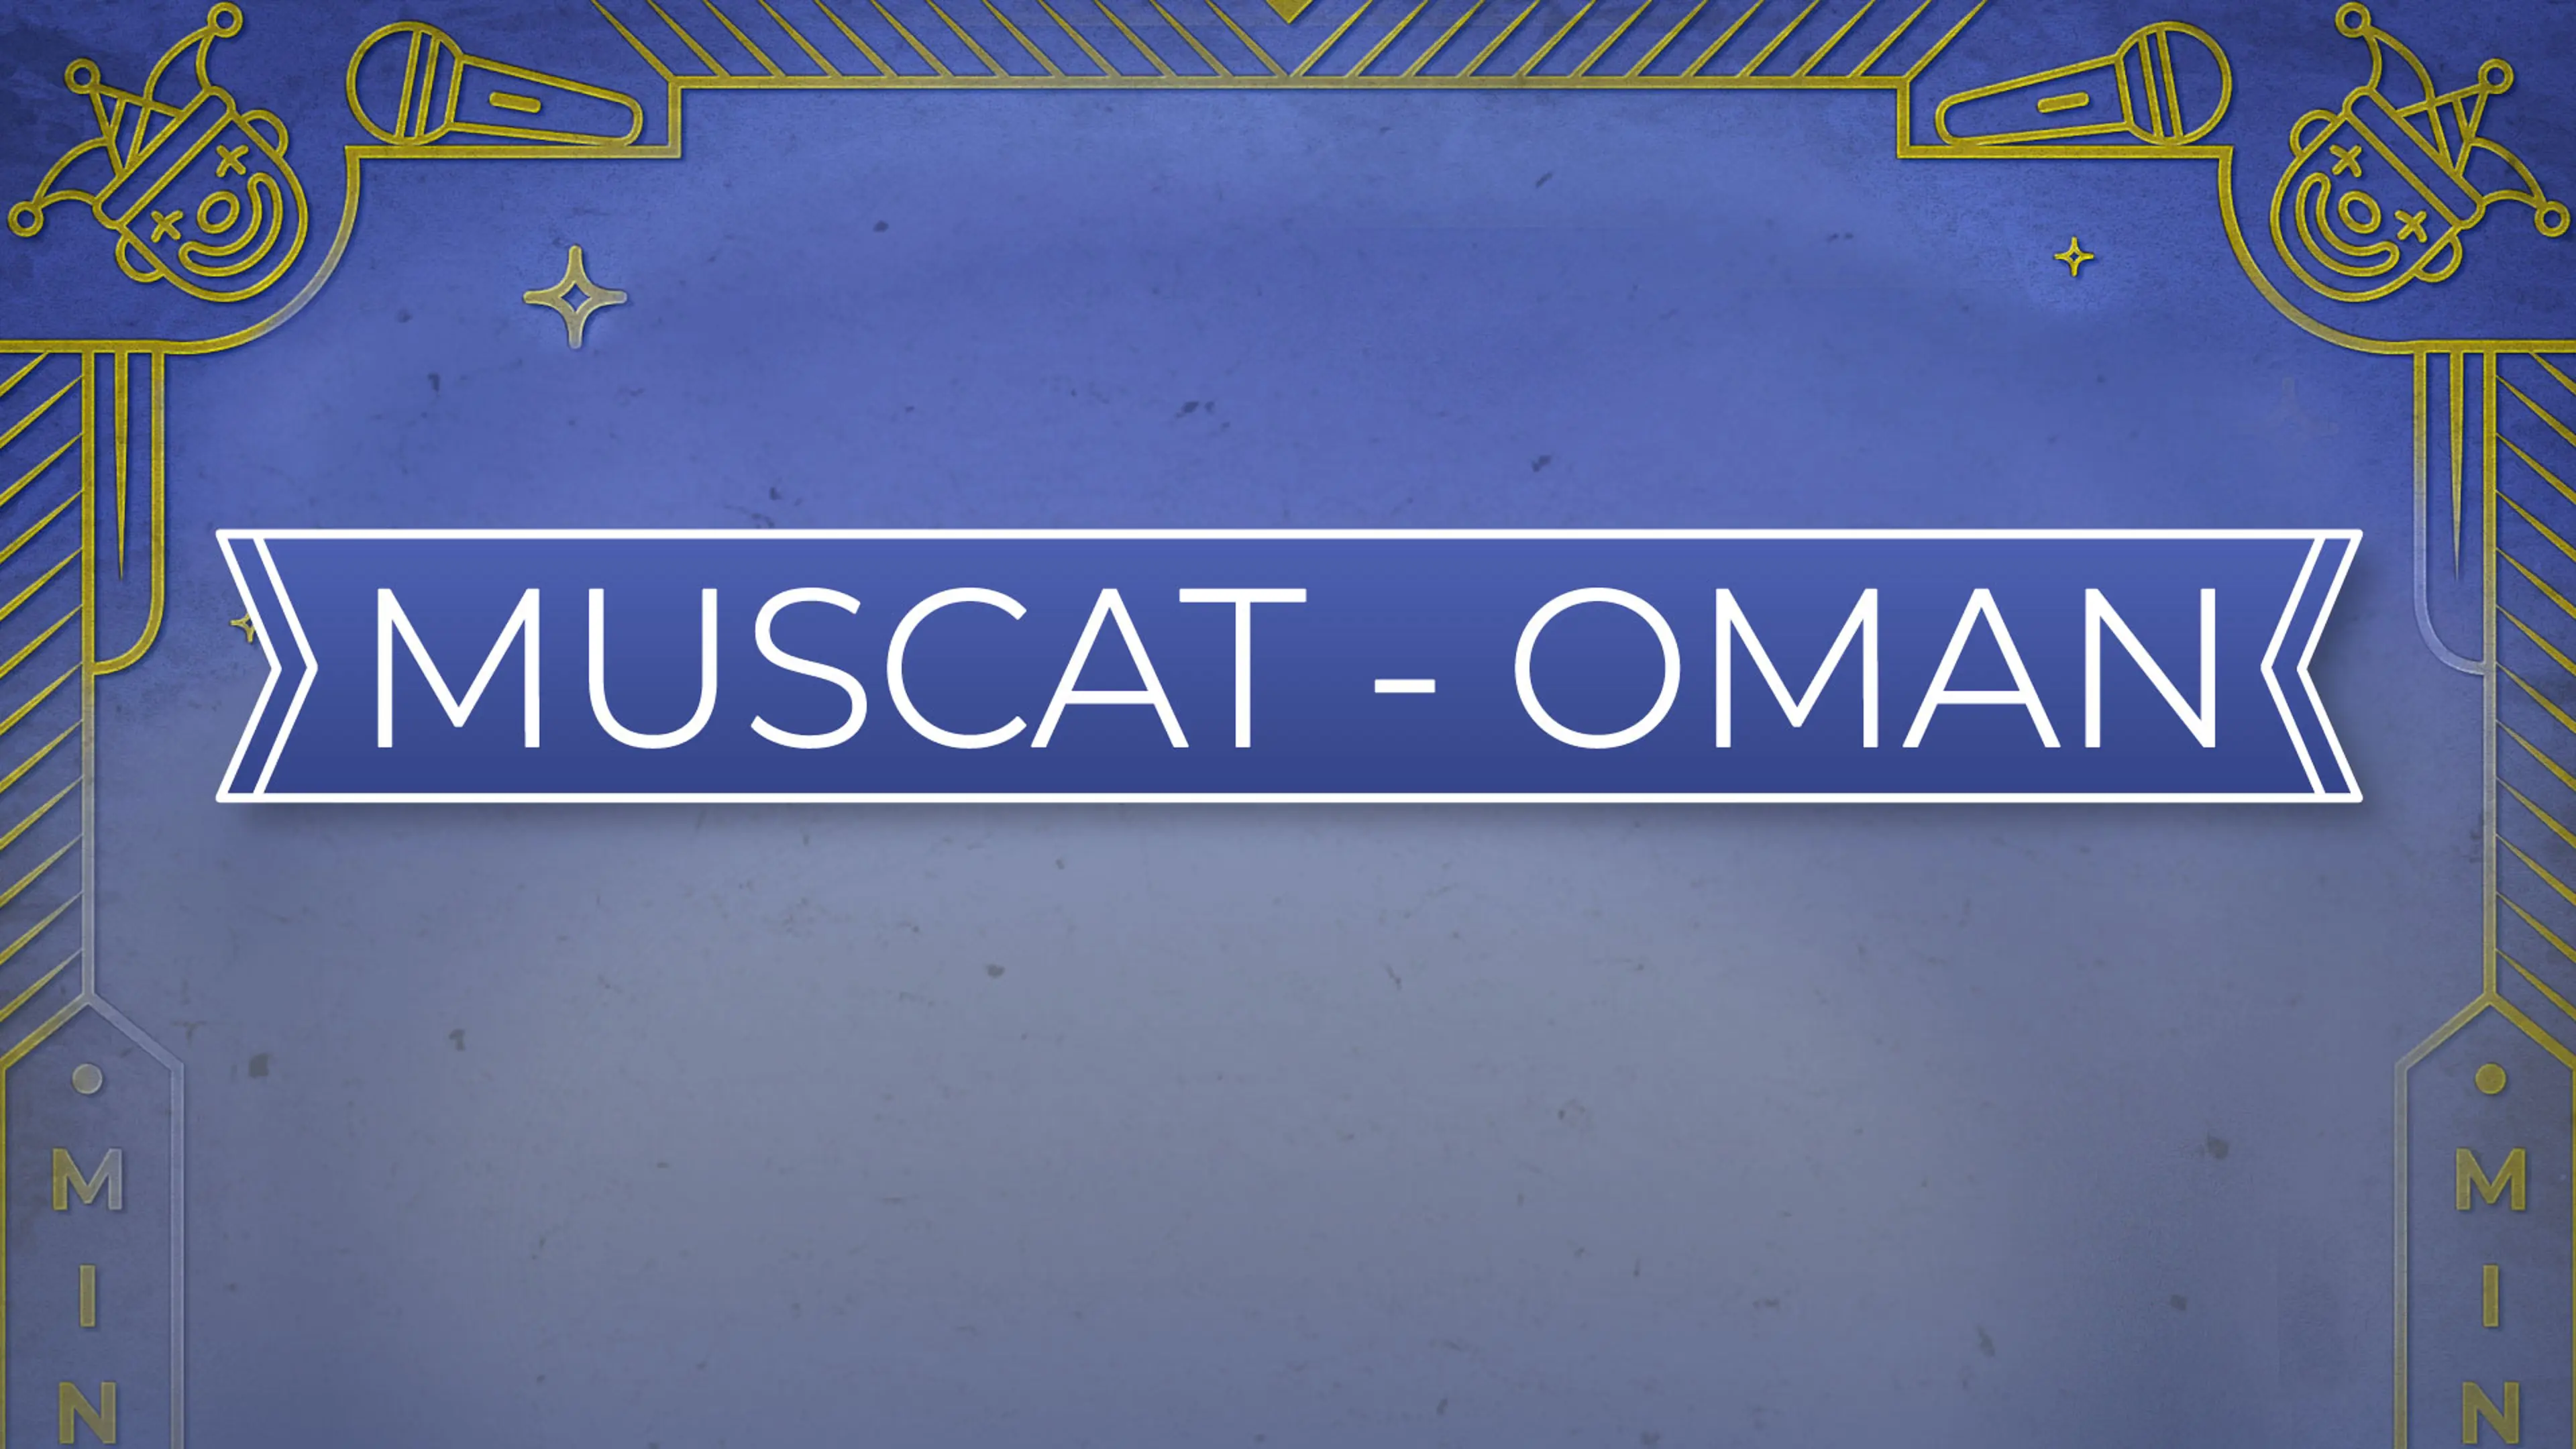 Muscat - Sept 29